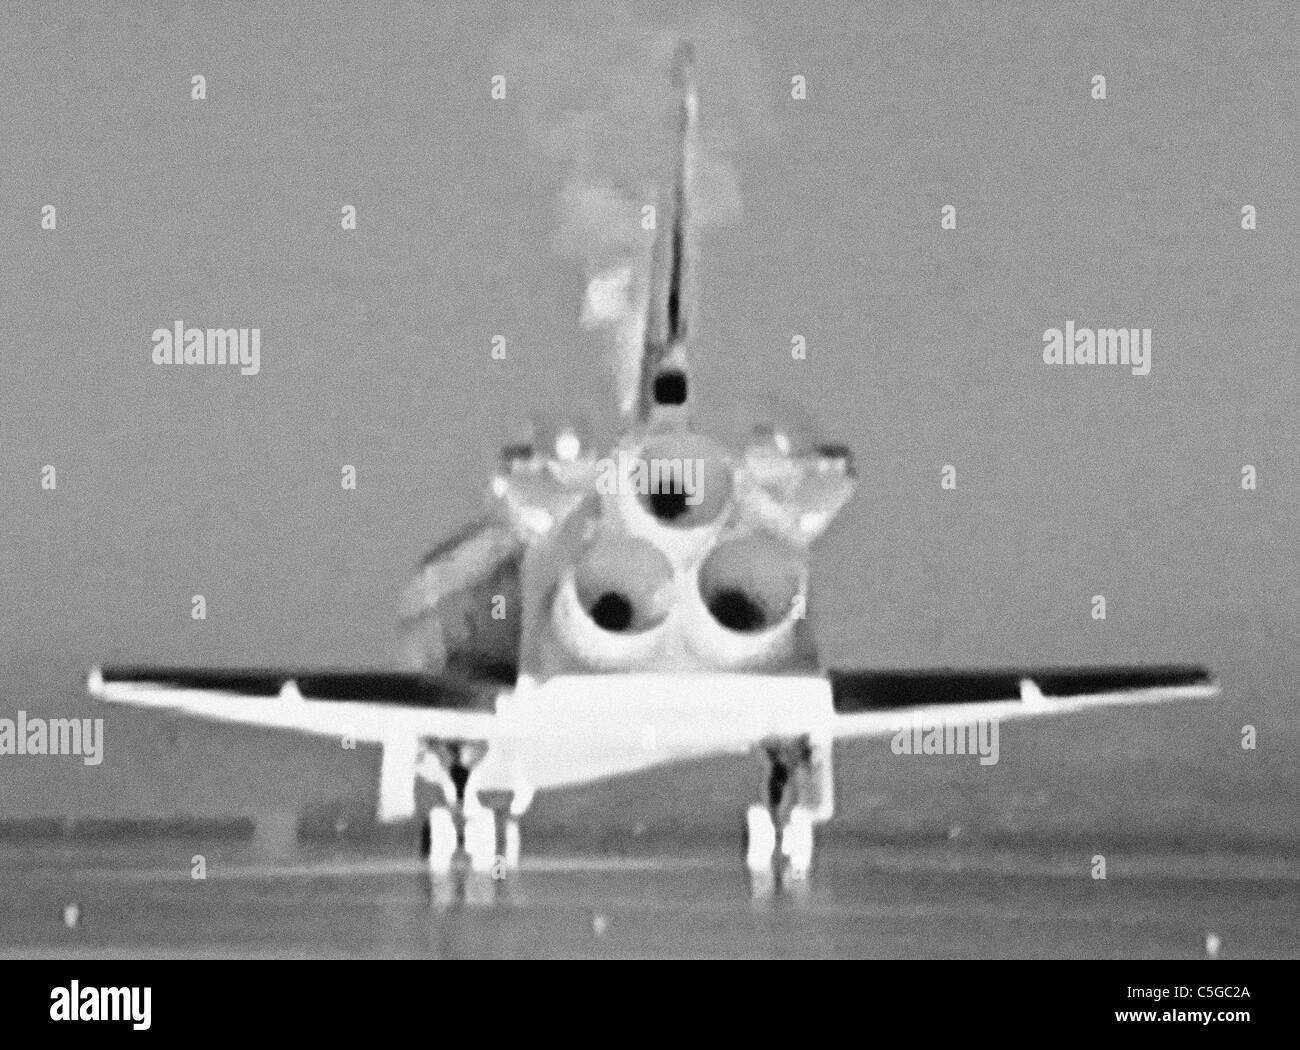 Atlantis returns - touchdown thermal image - last space shuttle lands  Credit: NASA IMAGE Stock Photo